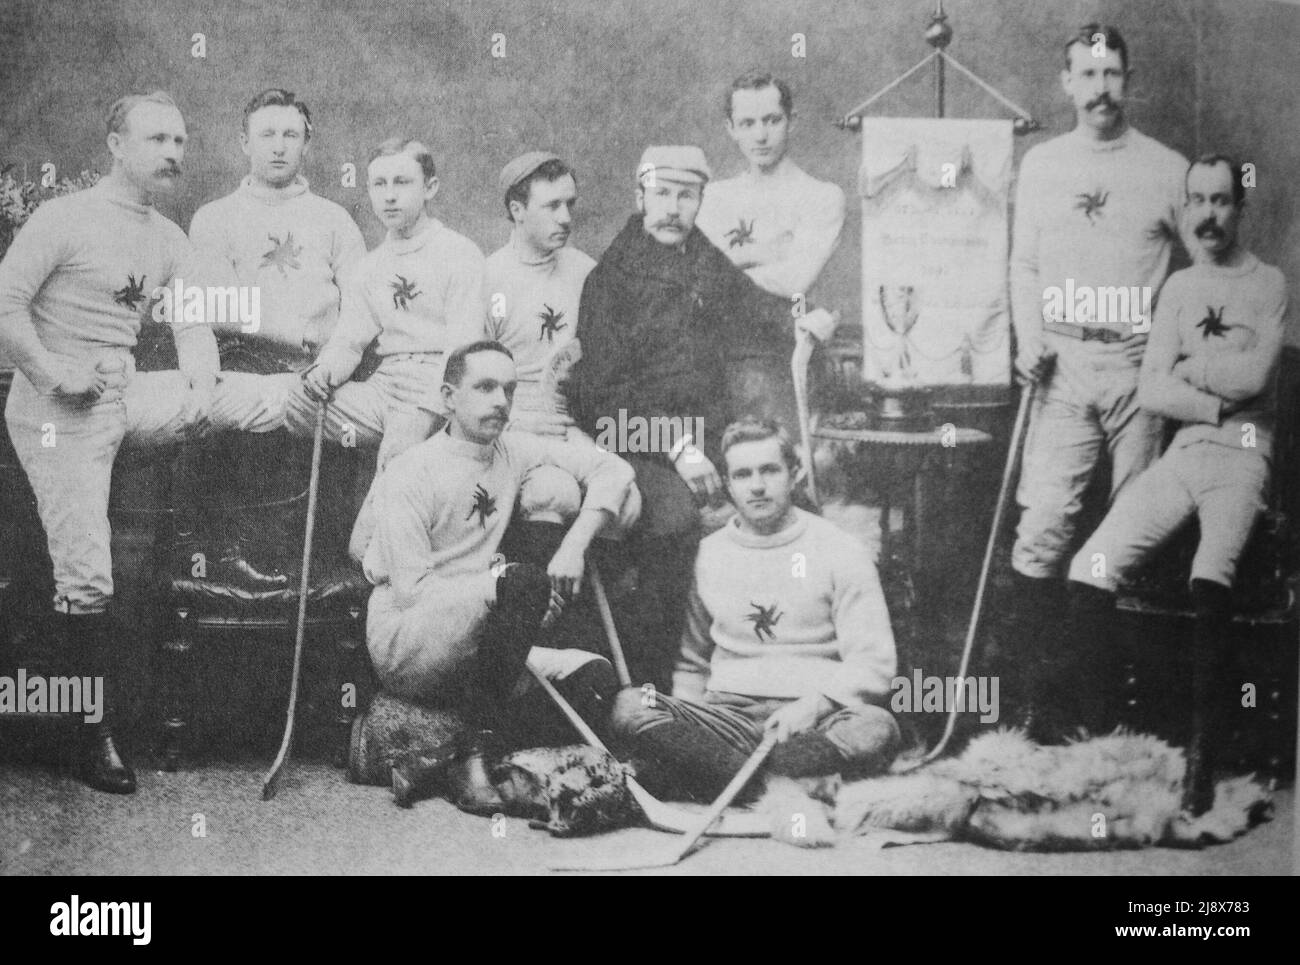 Ottawa Hockey Club, marzo 1891 - Back Row, da L a R: H. Kirby, A. Morel, C. Kirby, H.Y. Russell, F.M.S. Jenkins, W.C. Young ?, Front Row, da L a R: R. Bradley, J. Kerr ca. 1891 Foto Stock